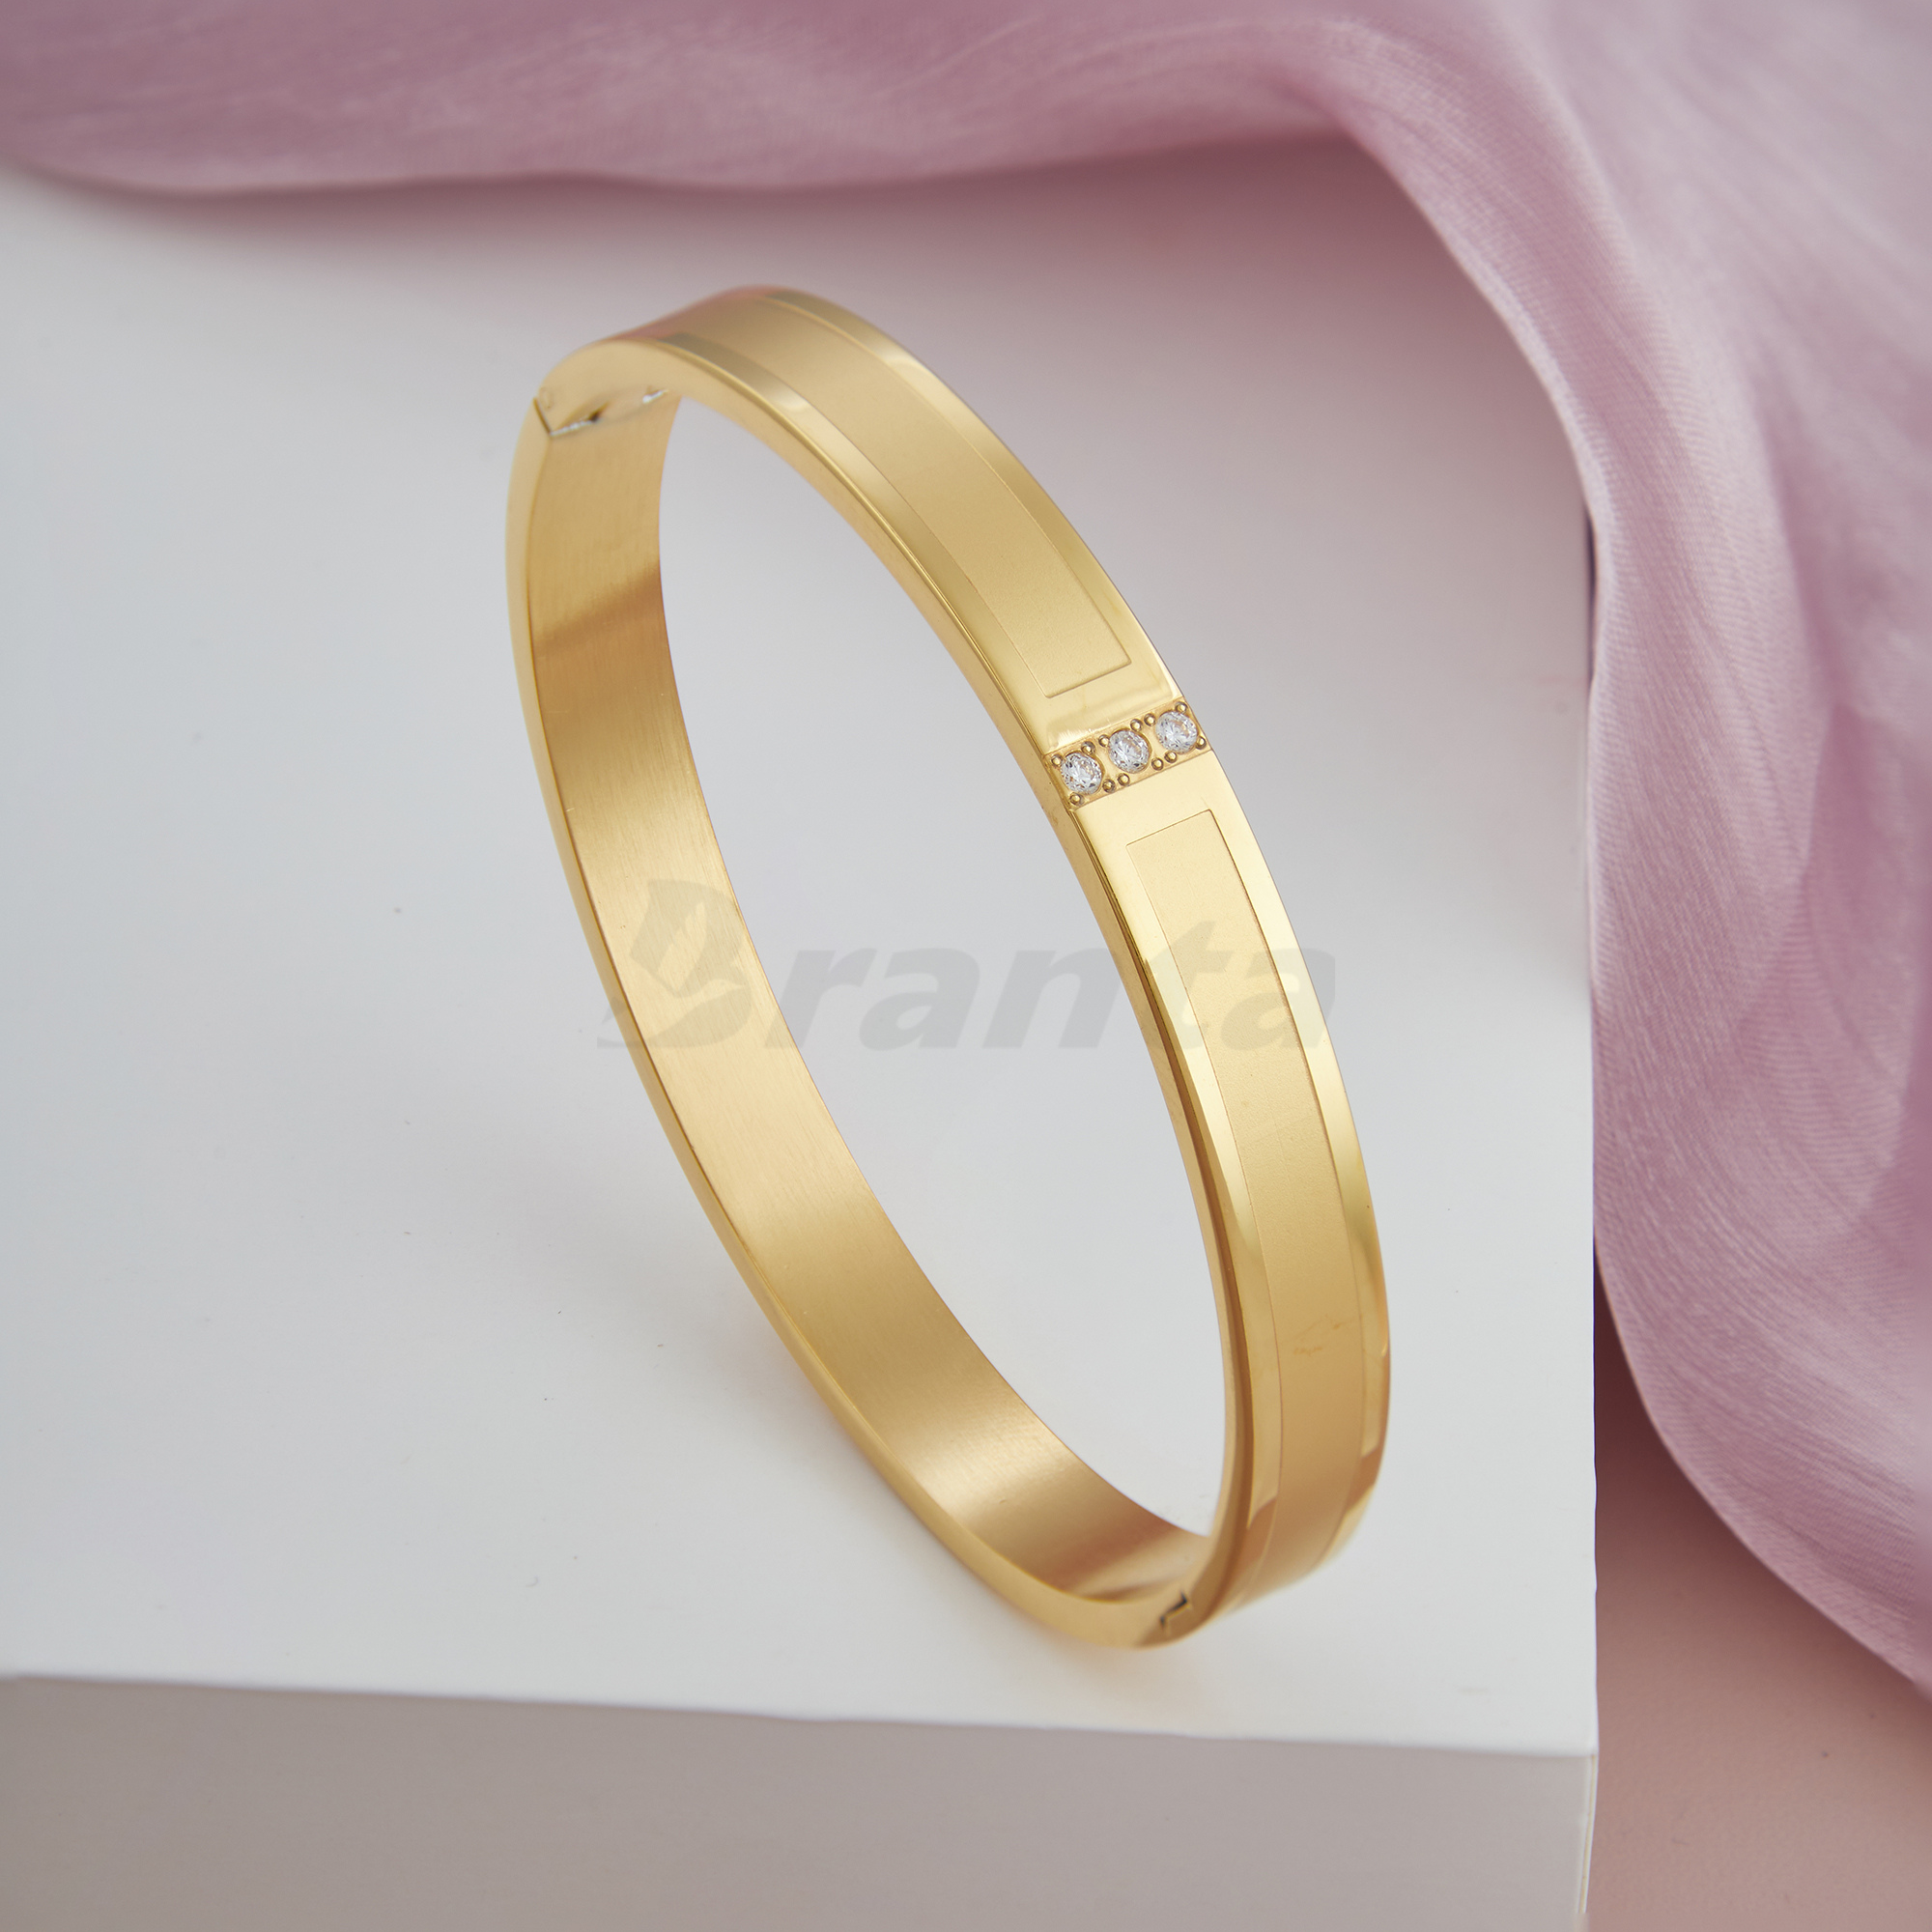 Buy AFJ Gold 1 Gram Gold Plated Traditional Designer Trendy Plain Bangles  Sets for Women & Girls (2.4) at Amazon.in